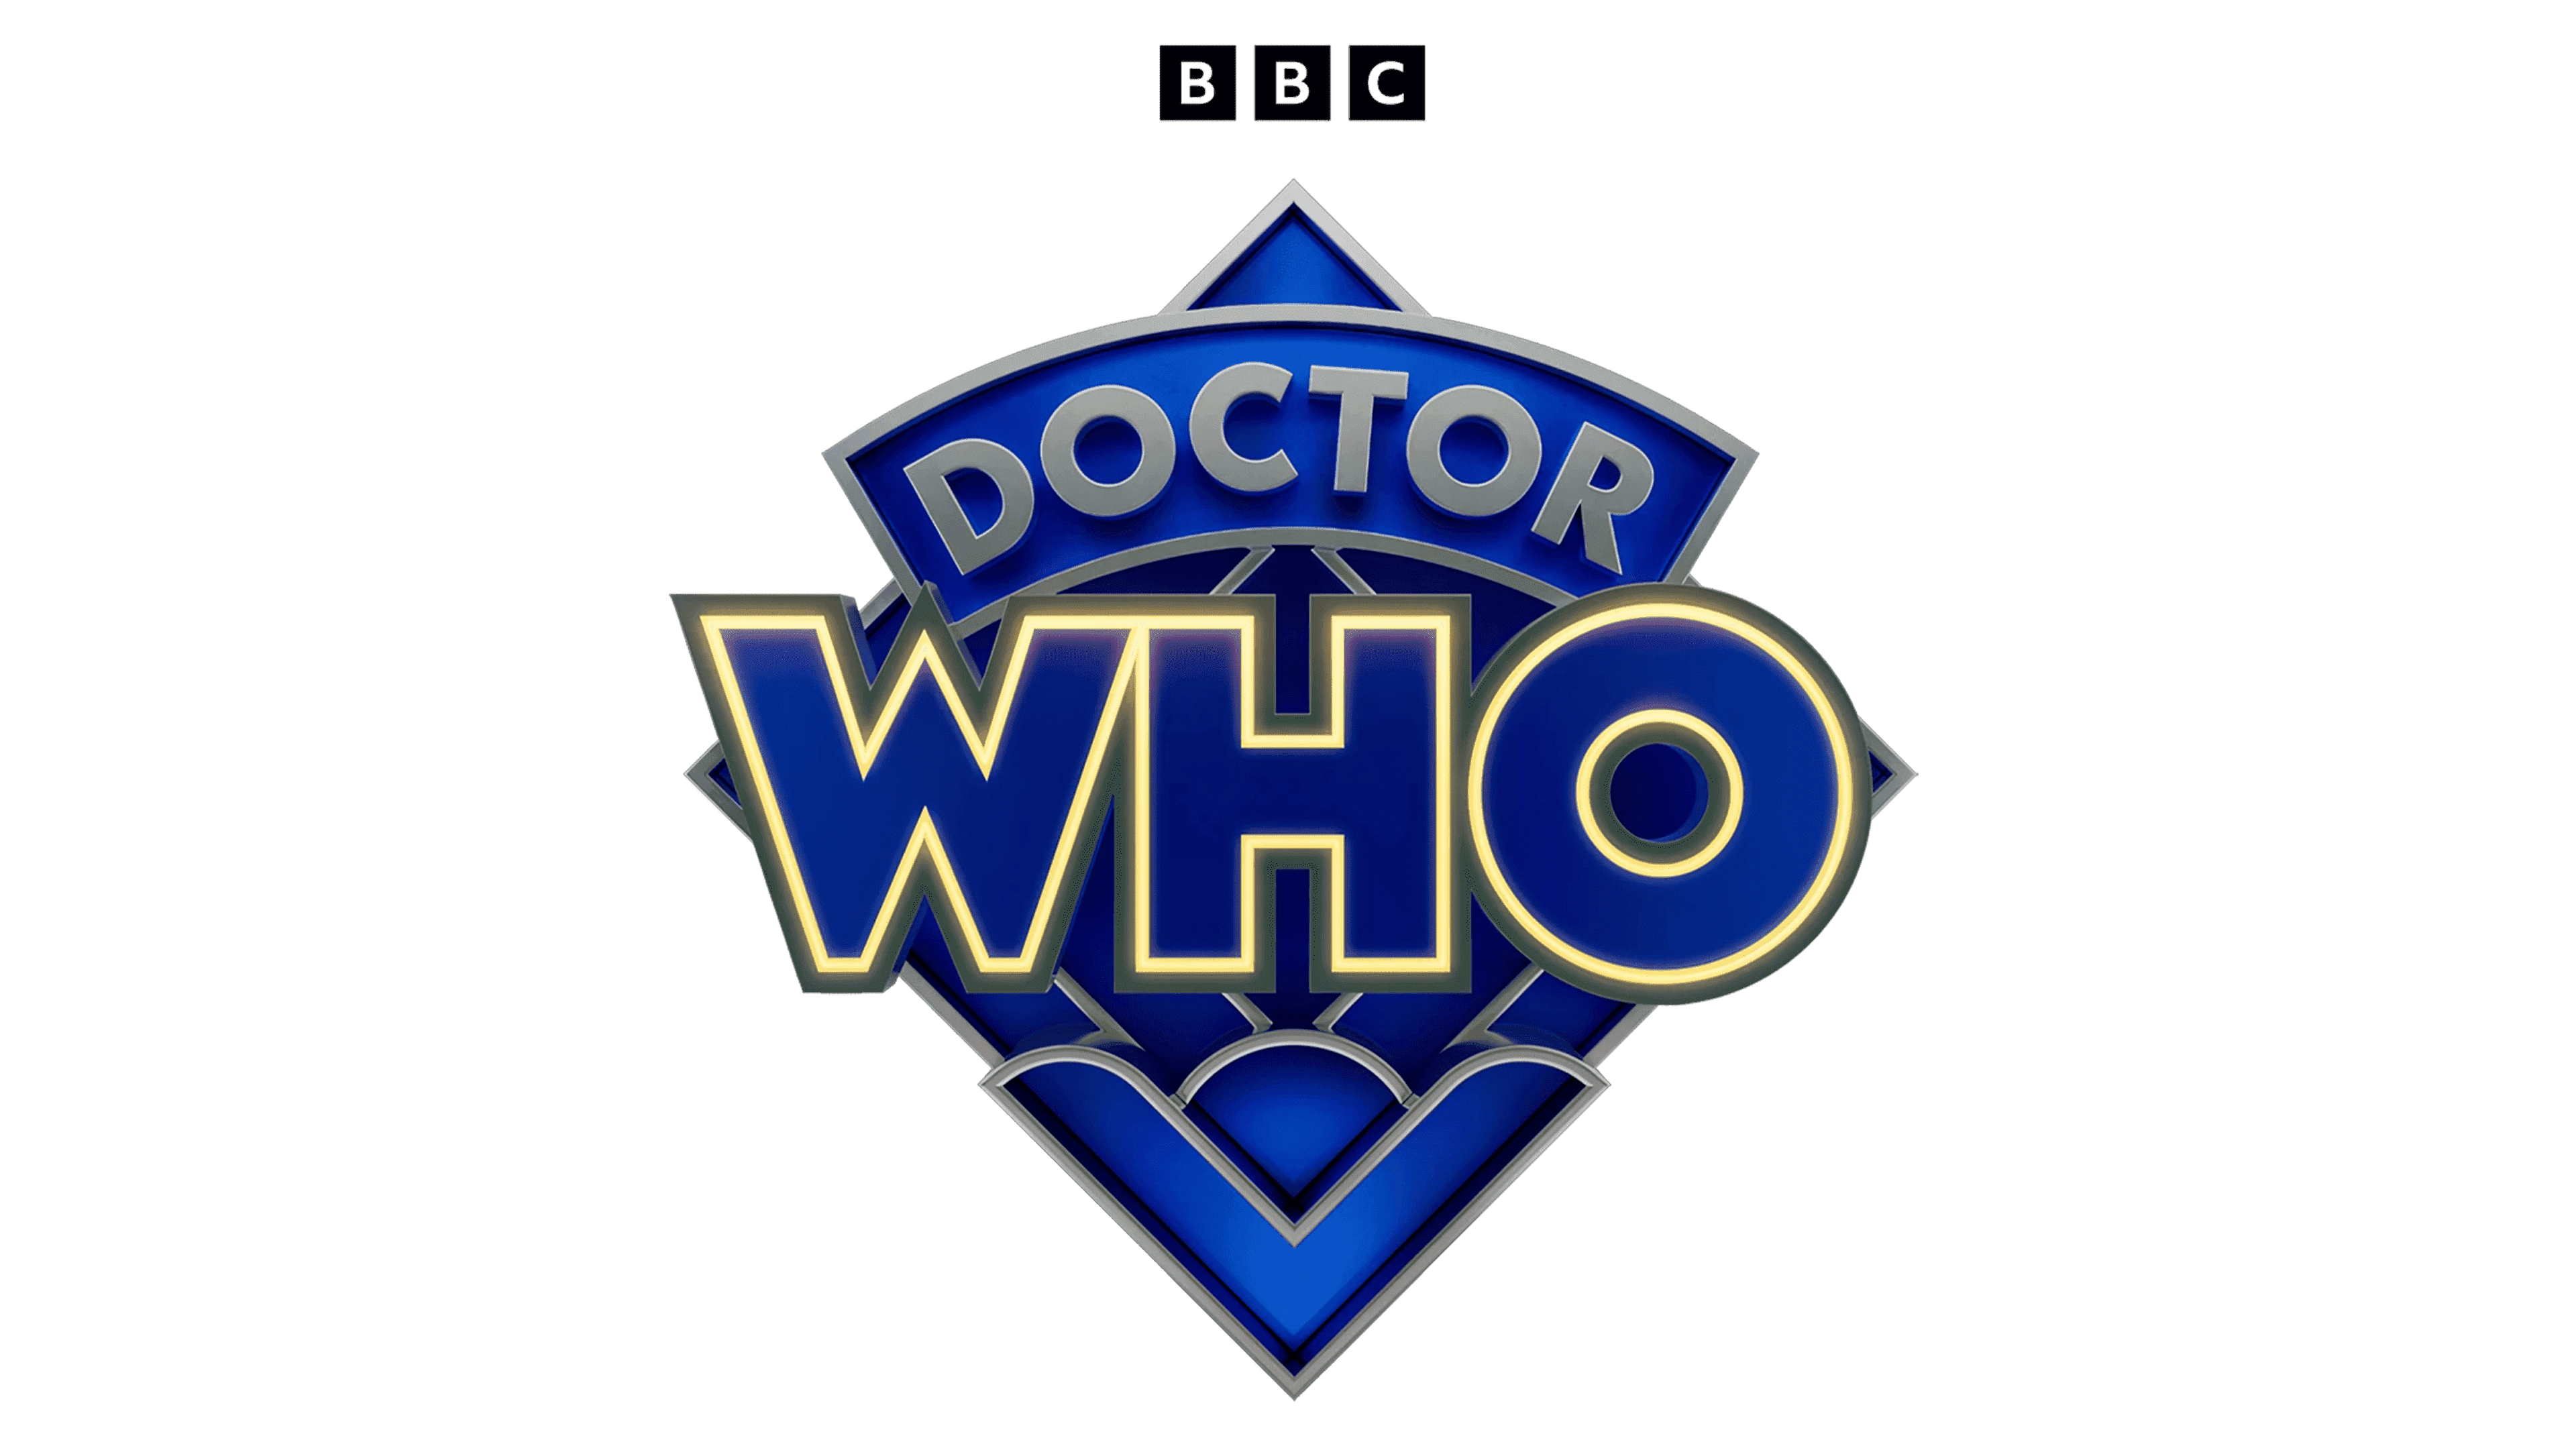 A circle containing the Doctor Who BBC logo